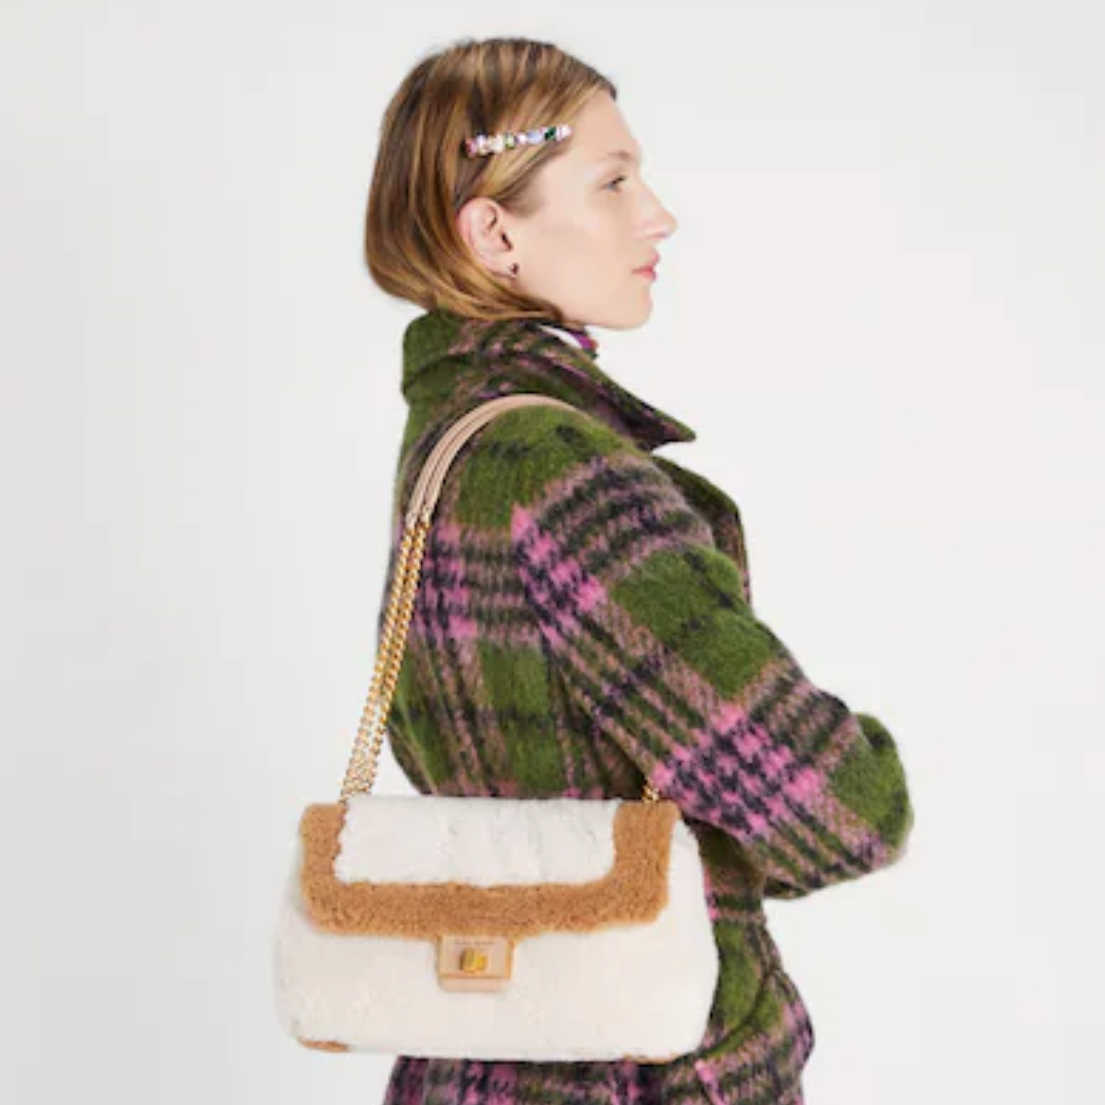 kate spade Sale: Get 30% Off Work Totes, Shoulder Bags and More Best-Selling  Handbag Styles